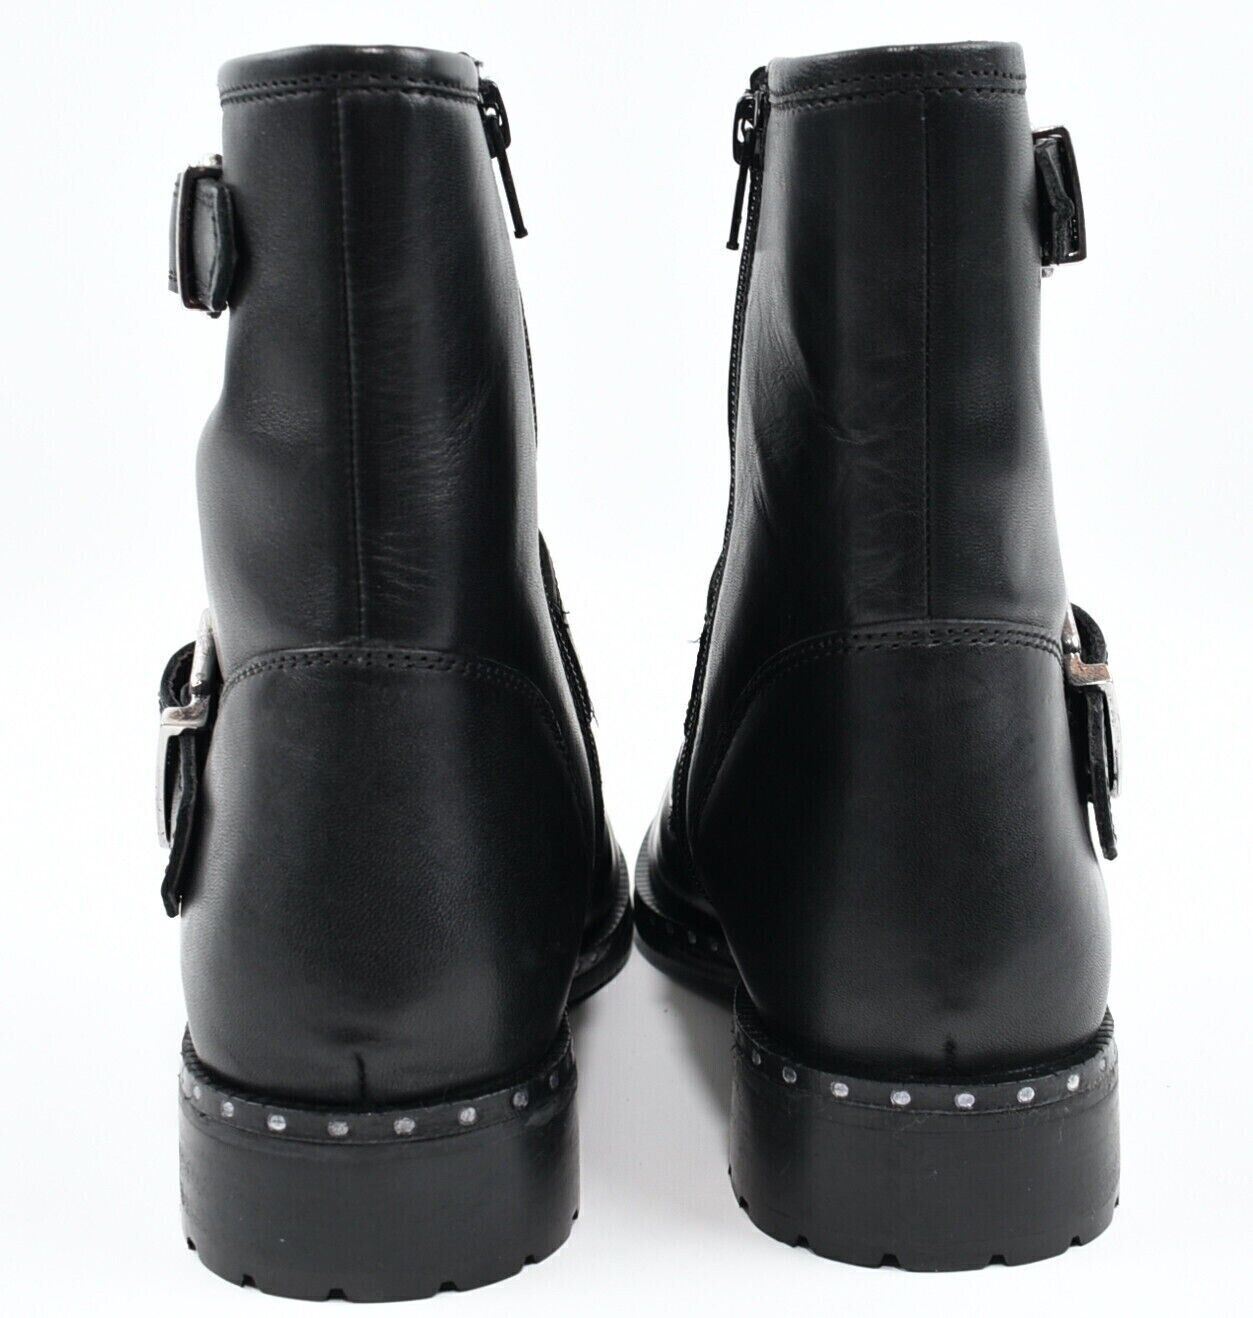 DUNE Women's RIKER 2 Boots, Genuine Leather, Black, size UK 7 /EU 40